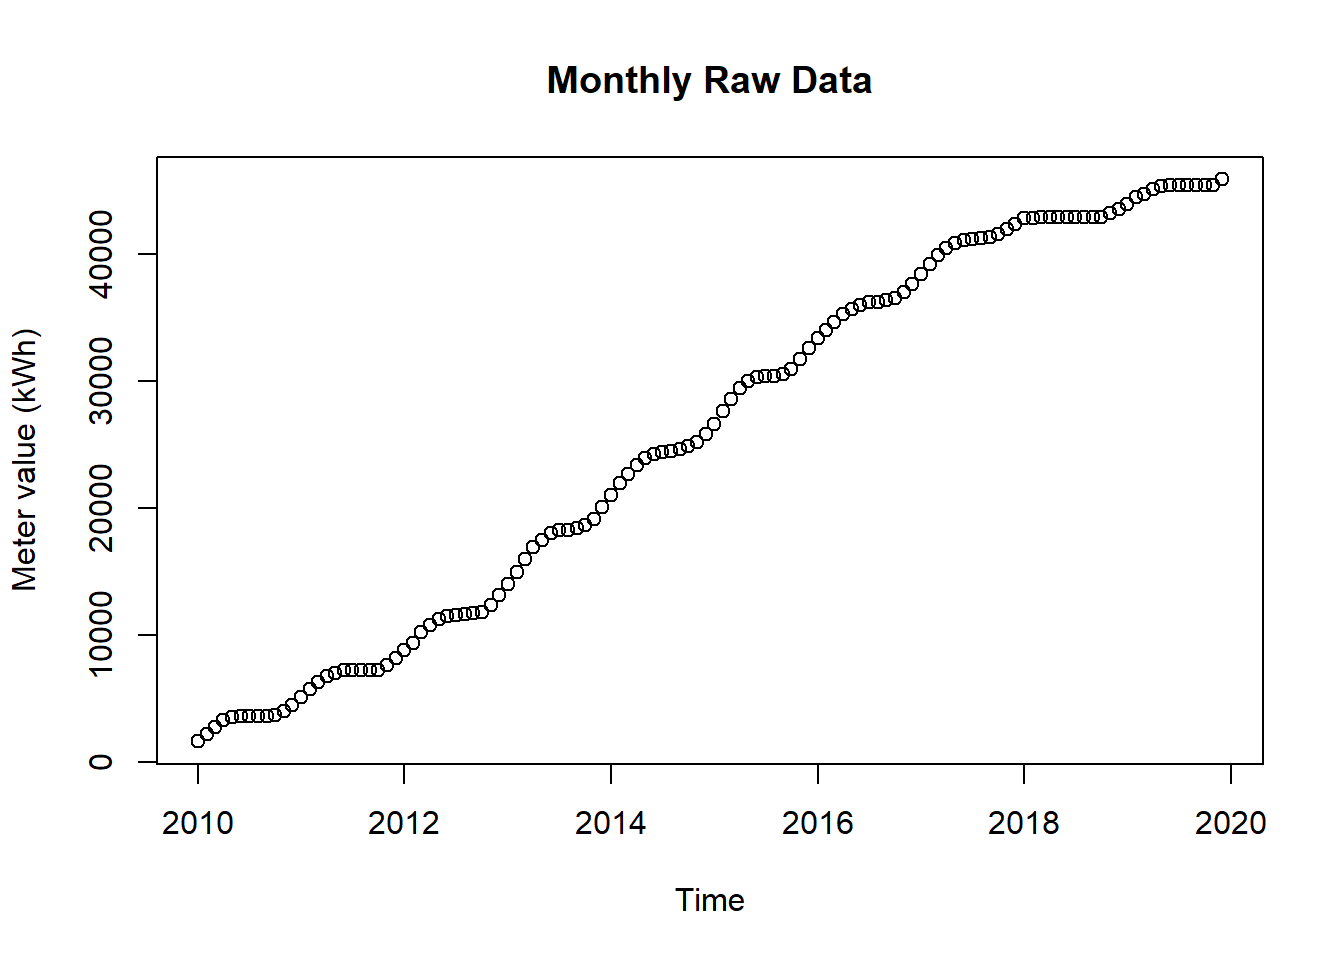 Raw Data for Seasonal Miniplots